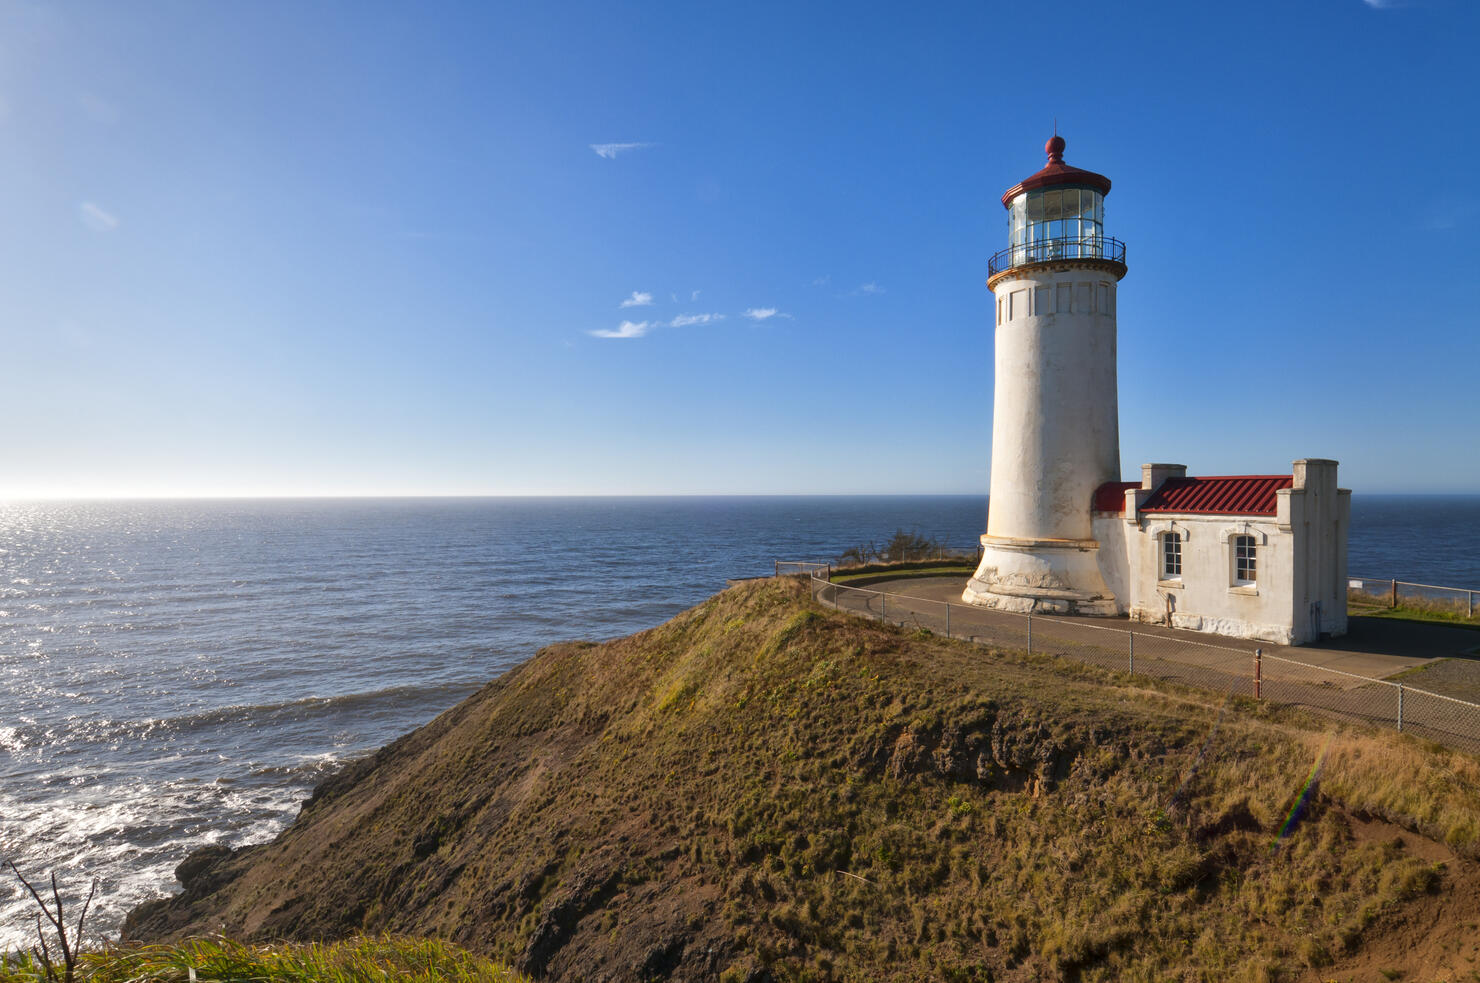 USA, Washington, lighthouse on cliff